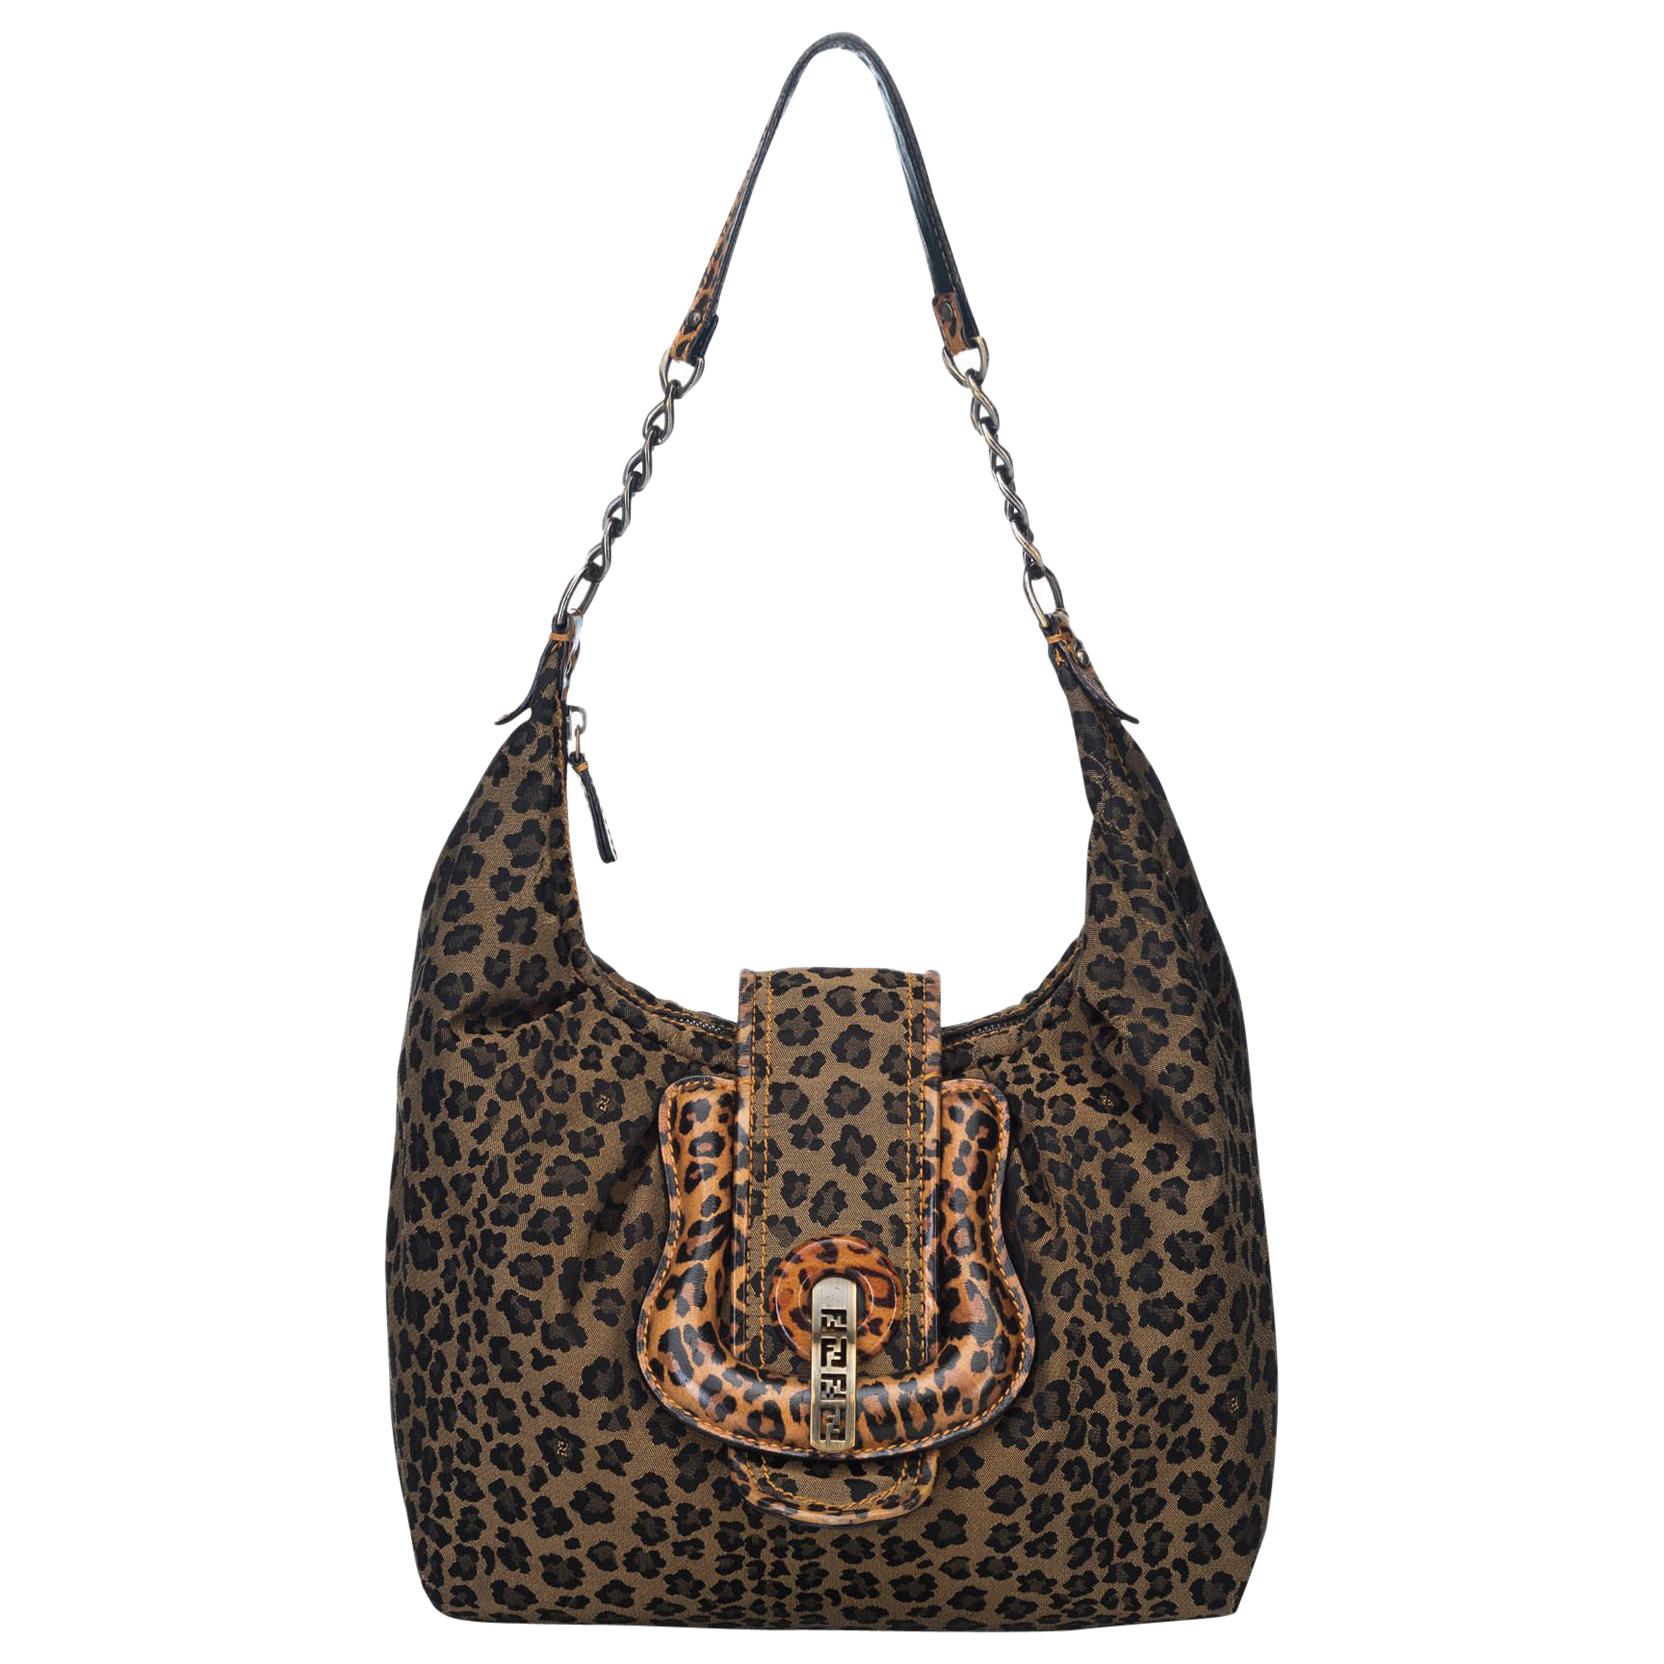 Fendi Leopard Print Hobo Bag